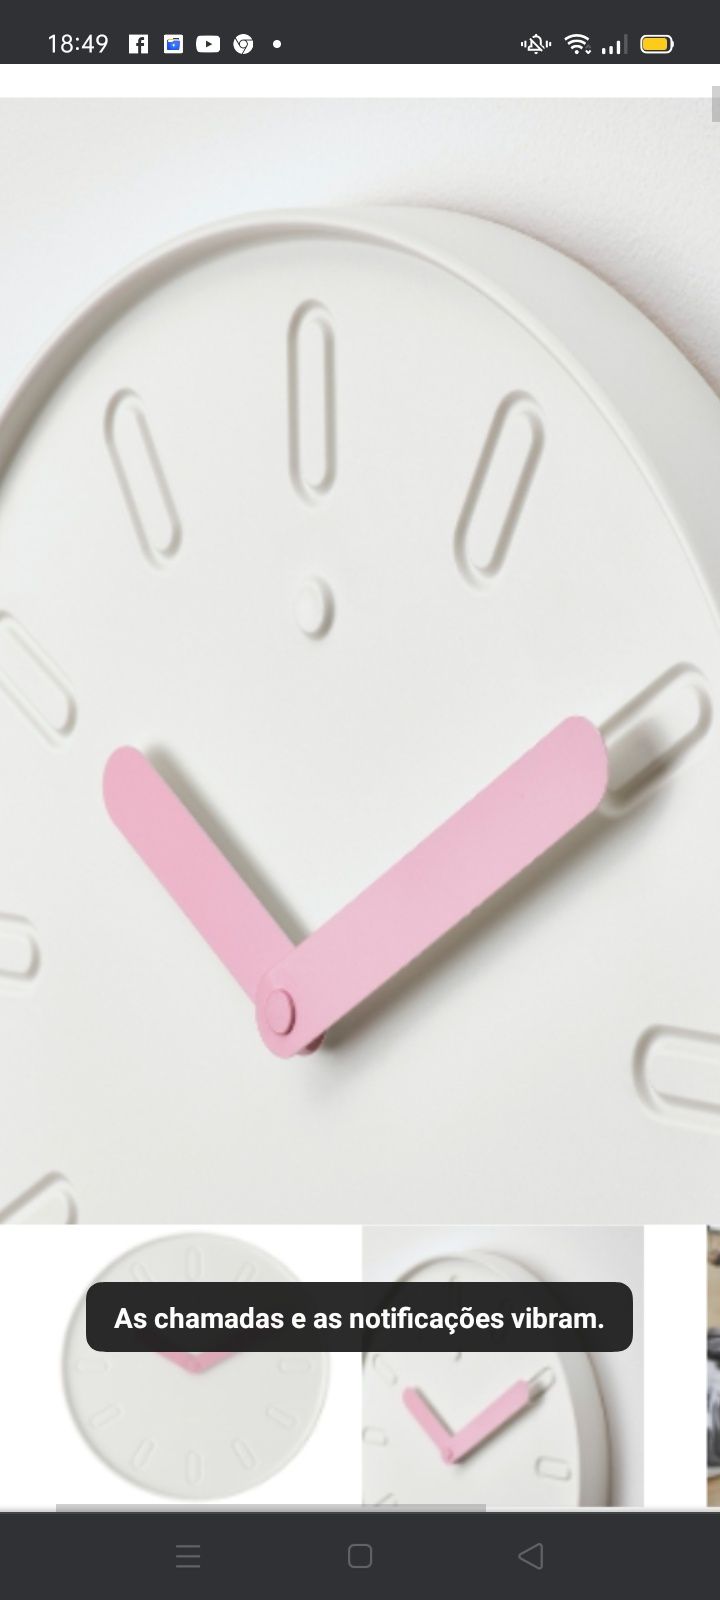 Relógio de parede, Slipsten IKEA. NOVO